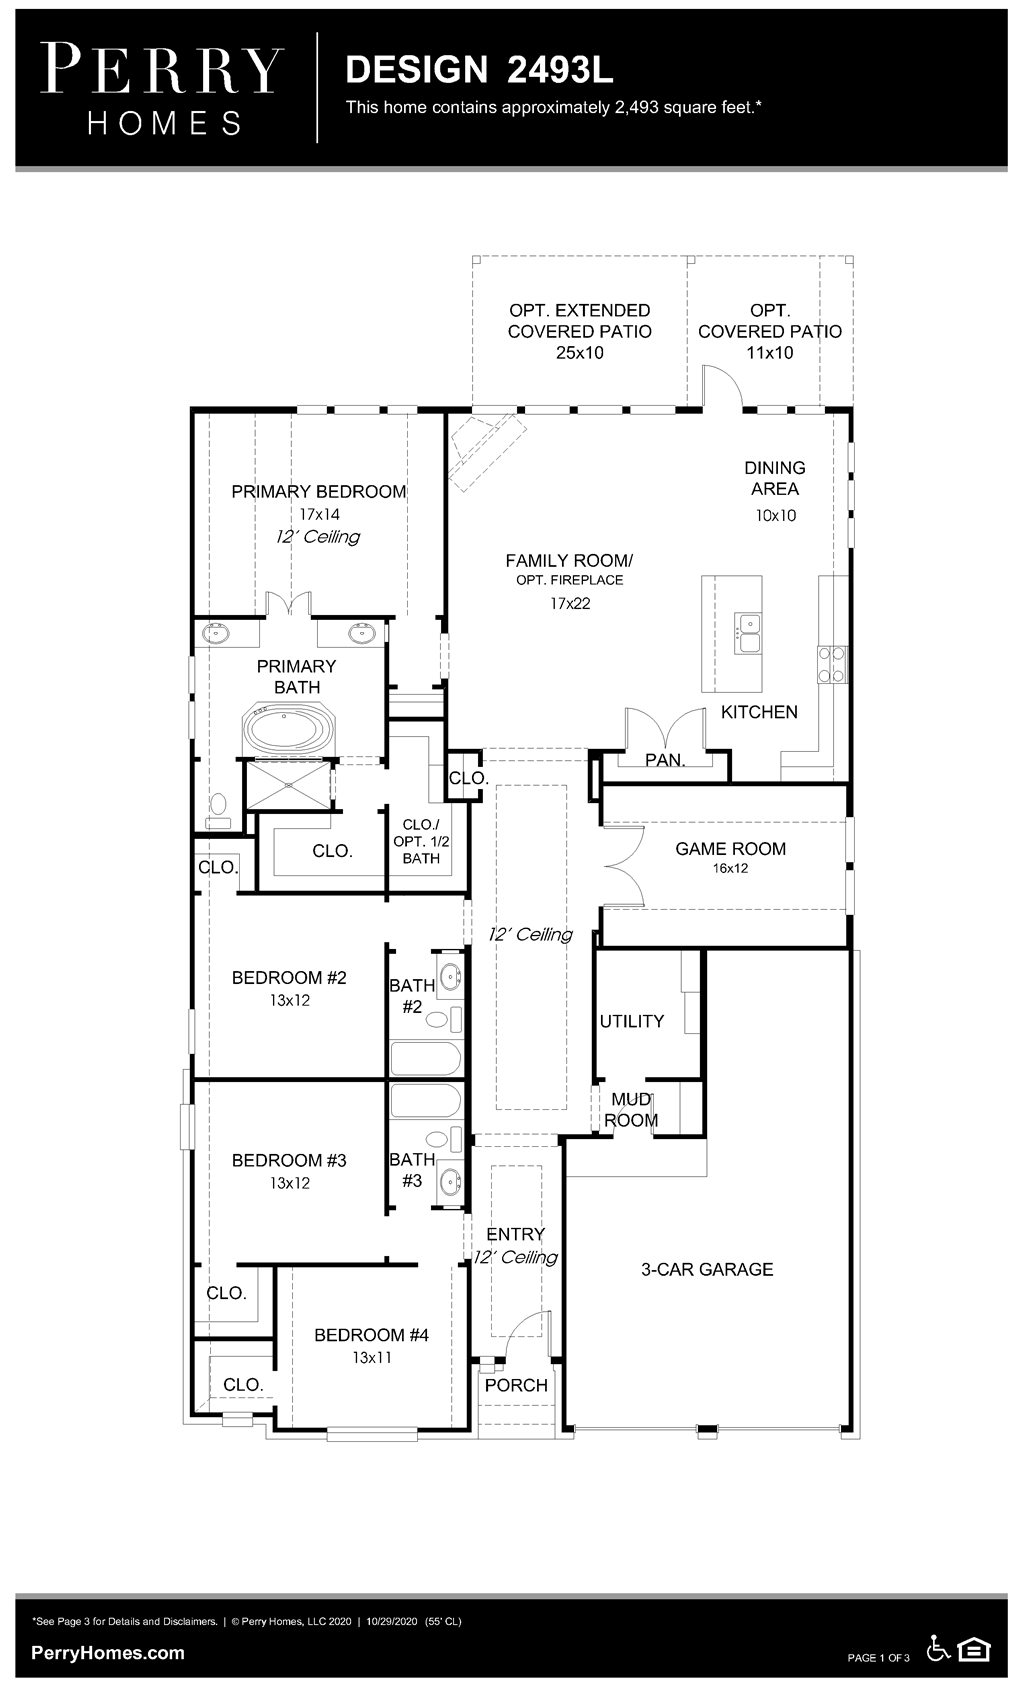 Floor Plan for 2493L